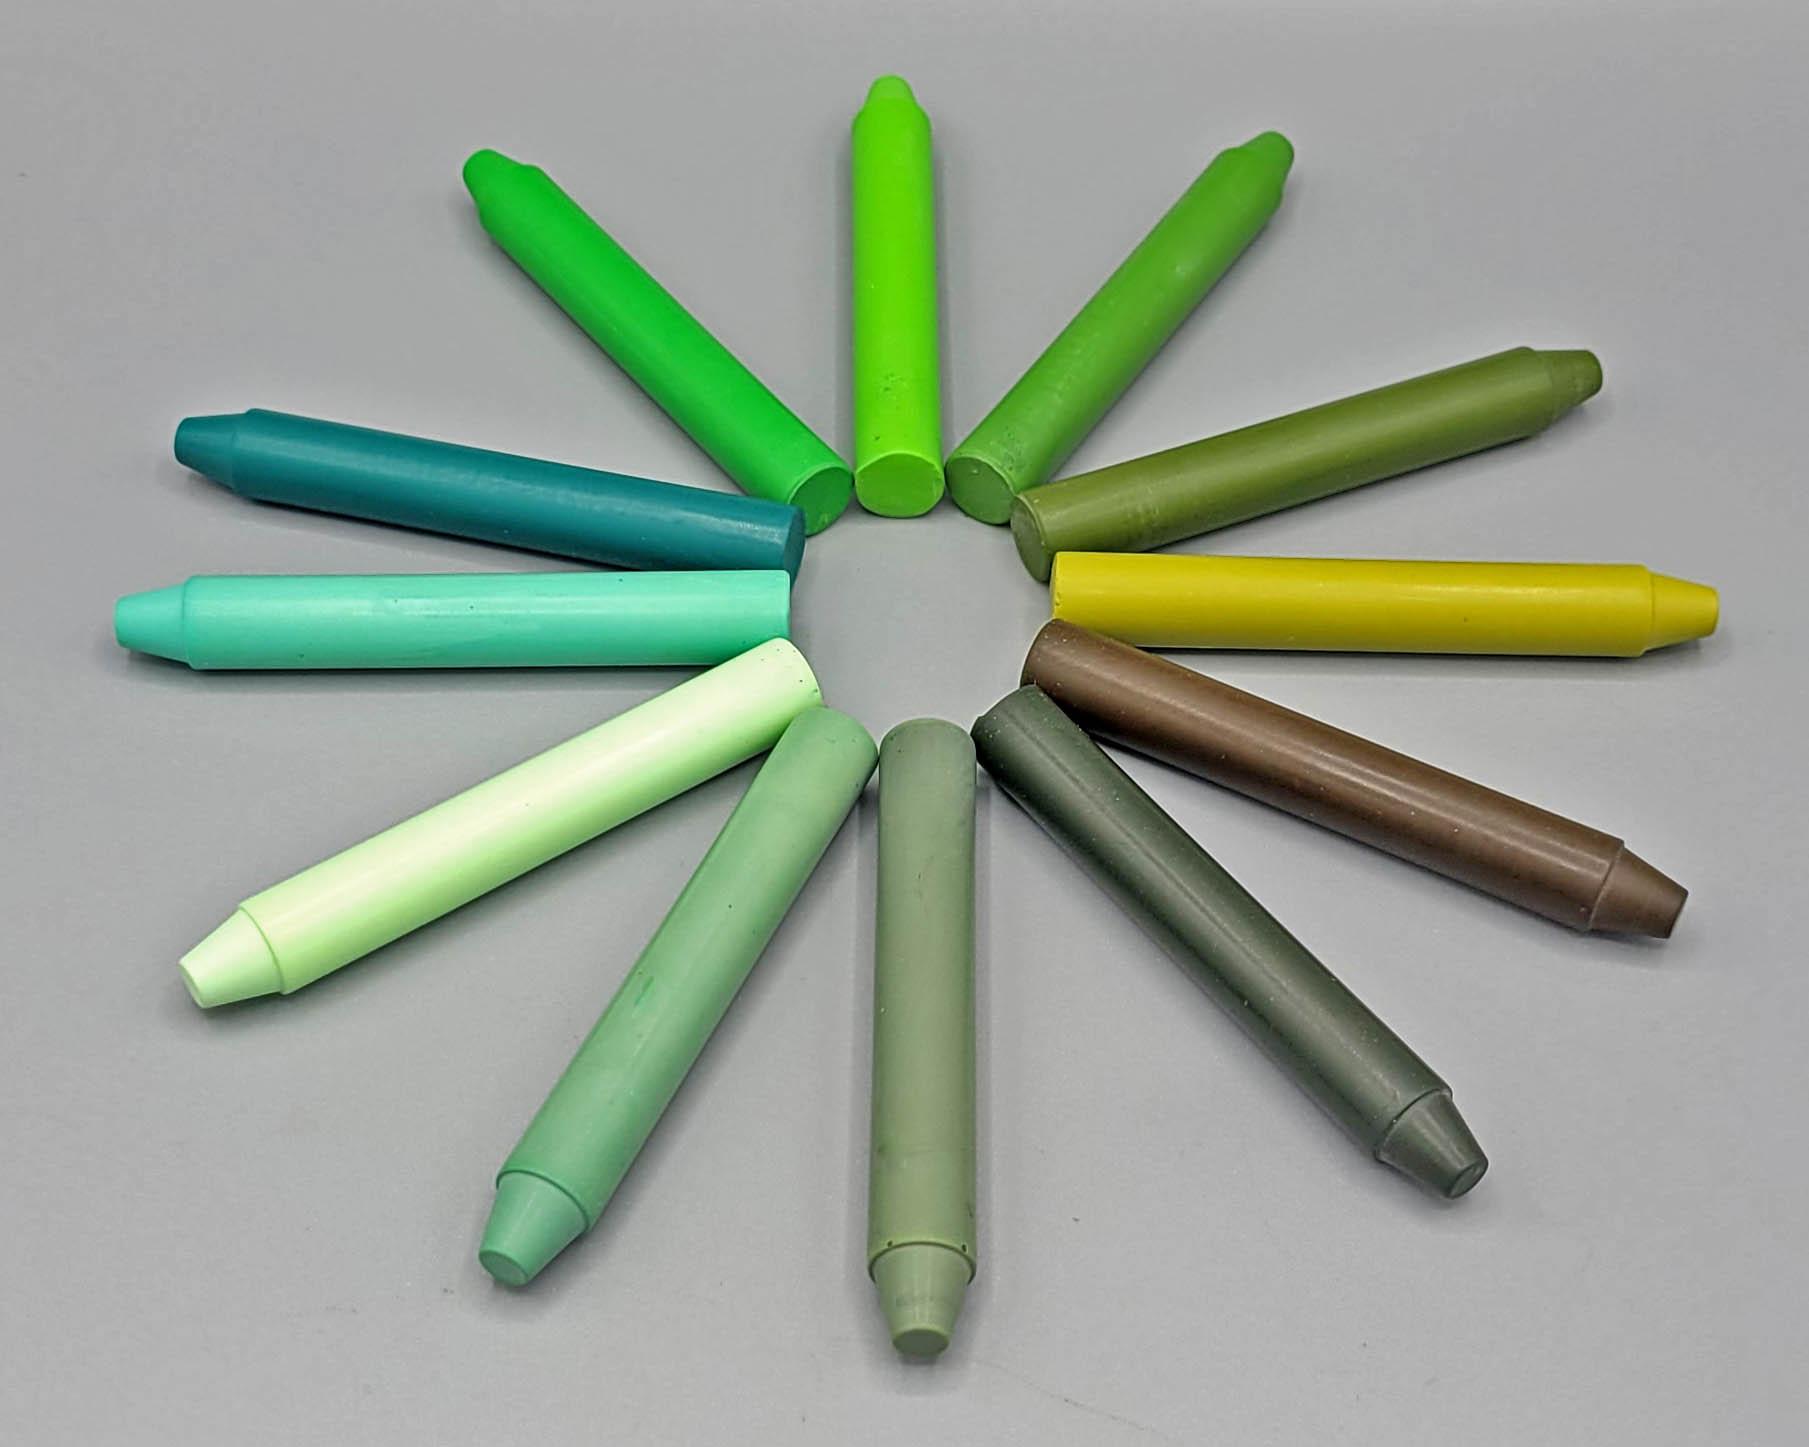 Filana – GREENS Beeswax STICK Crayons • PAPER SCISSORS STONE